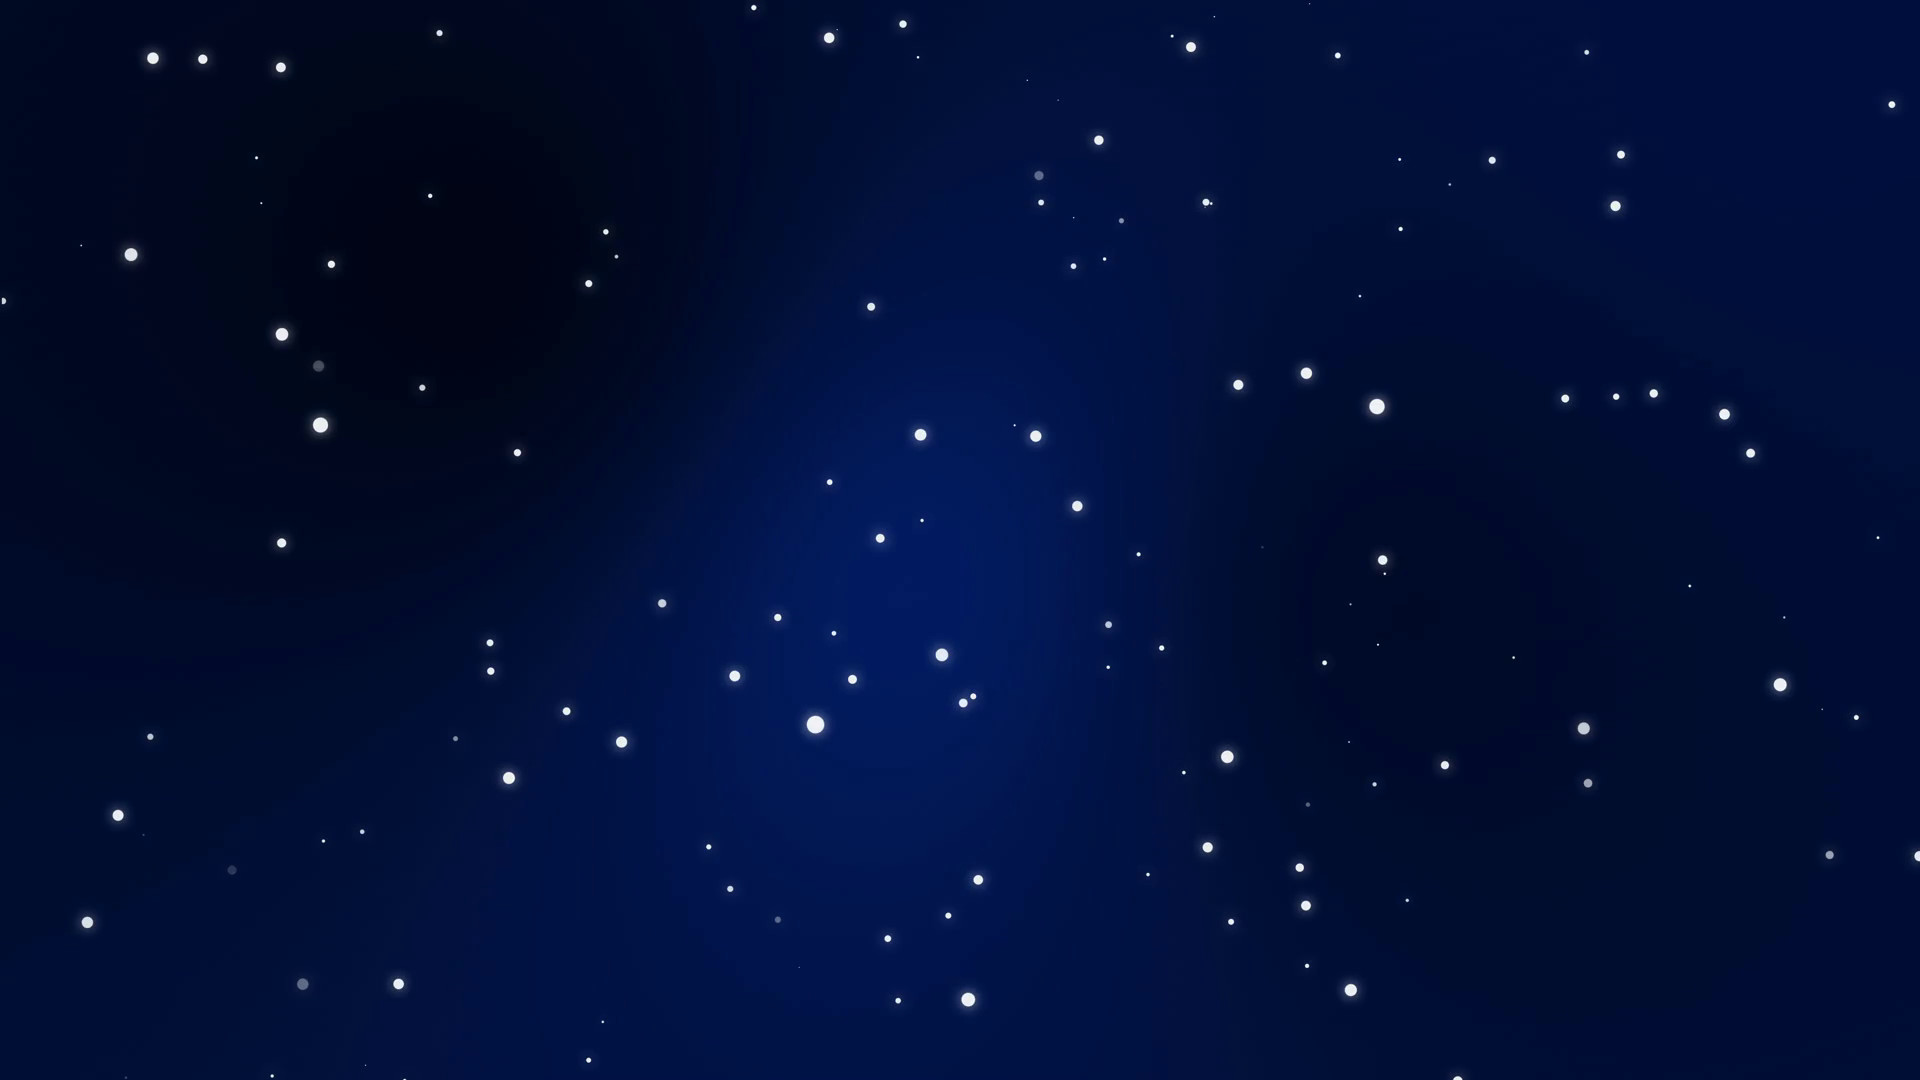 Blue Space Nebula wallpaper | Dark Space | Pinterest | Nebula .